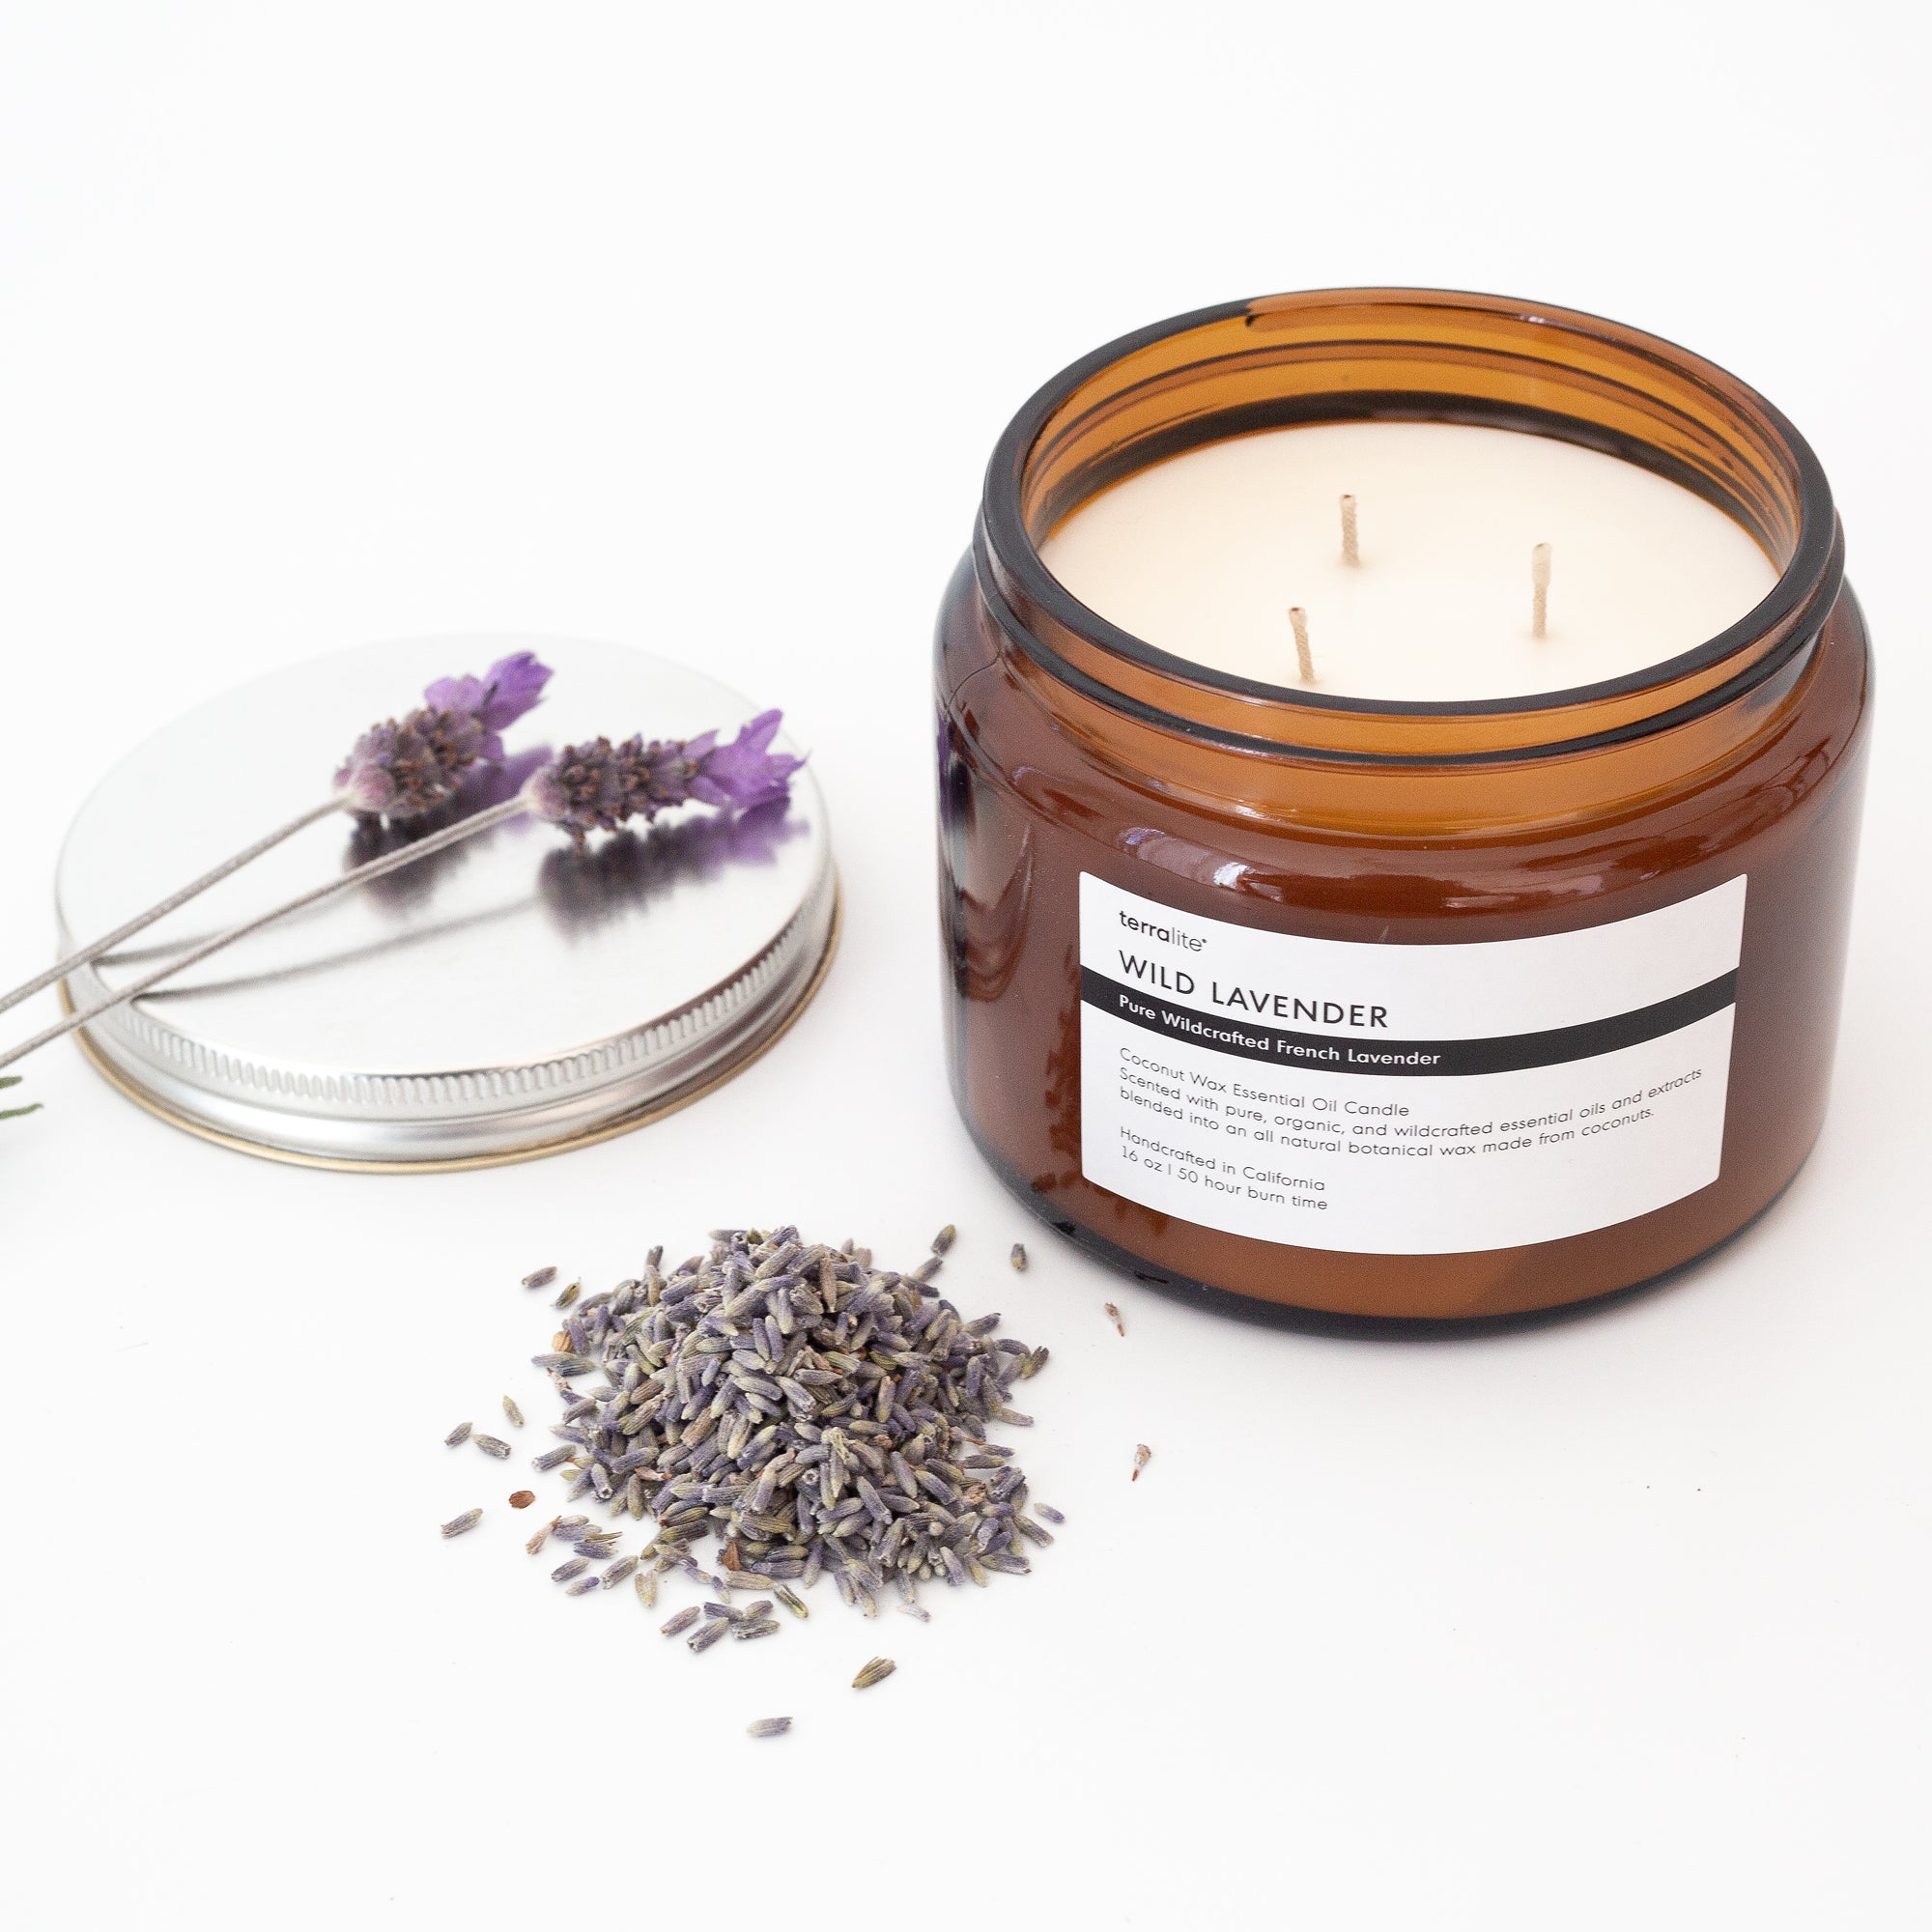 Wild Lavender Essential Oil Candle - 16 oz.